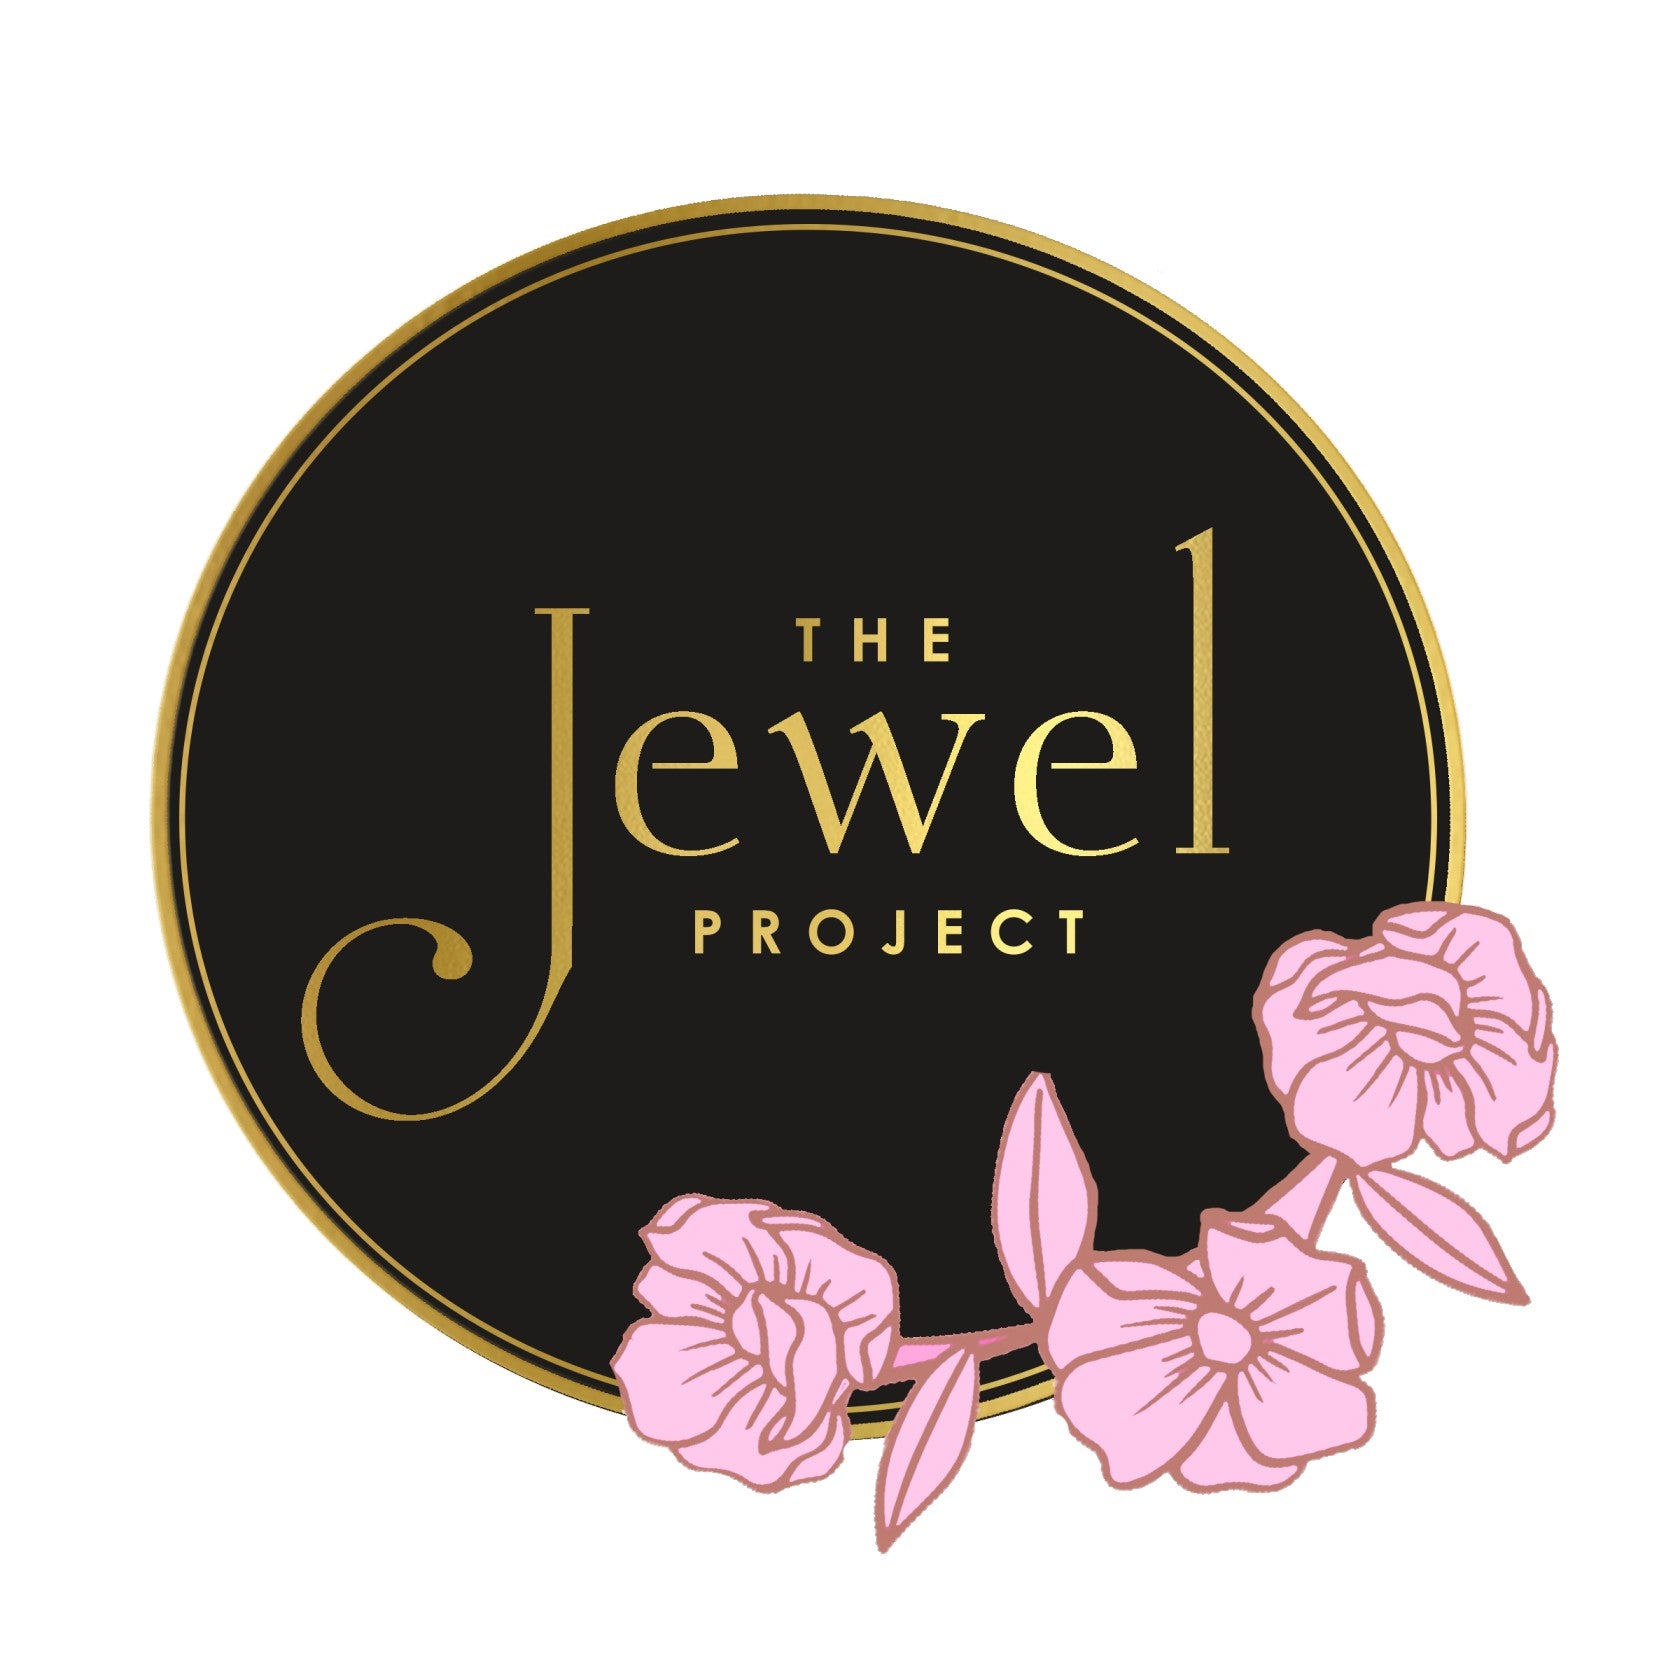 Paun Jewel Logo by Sopyan Giantoro on Dribbble